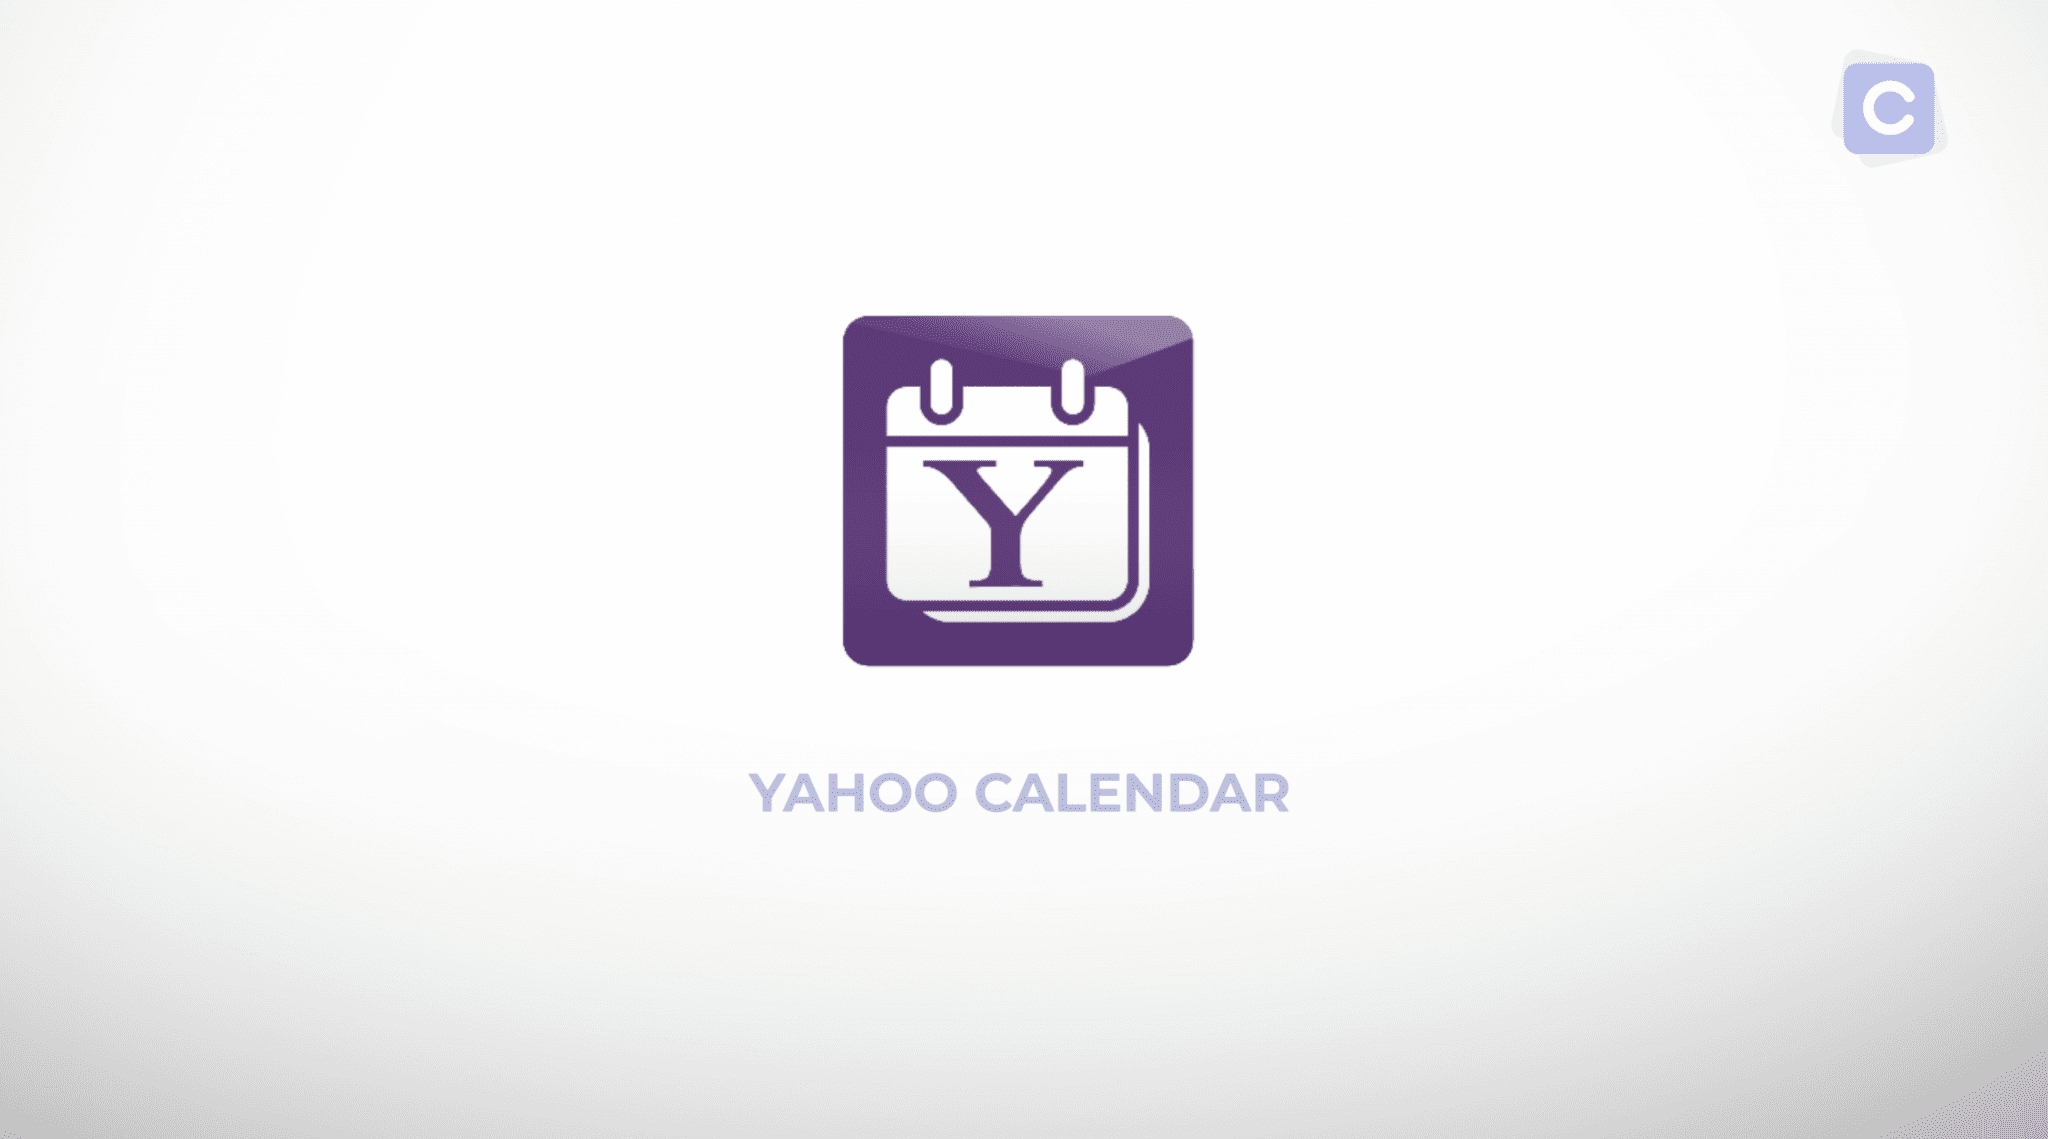 Yahoo Calendar Productivity Tip Guide - Calendar No Calendar Icon In Yahoo Mail